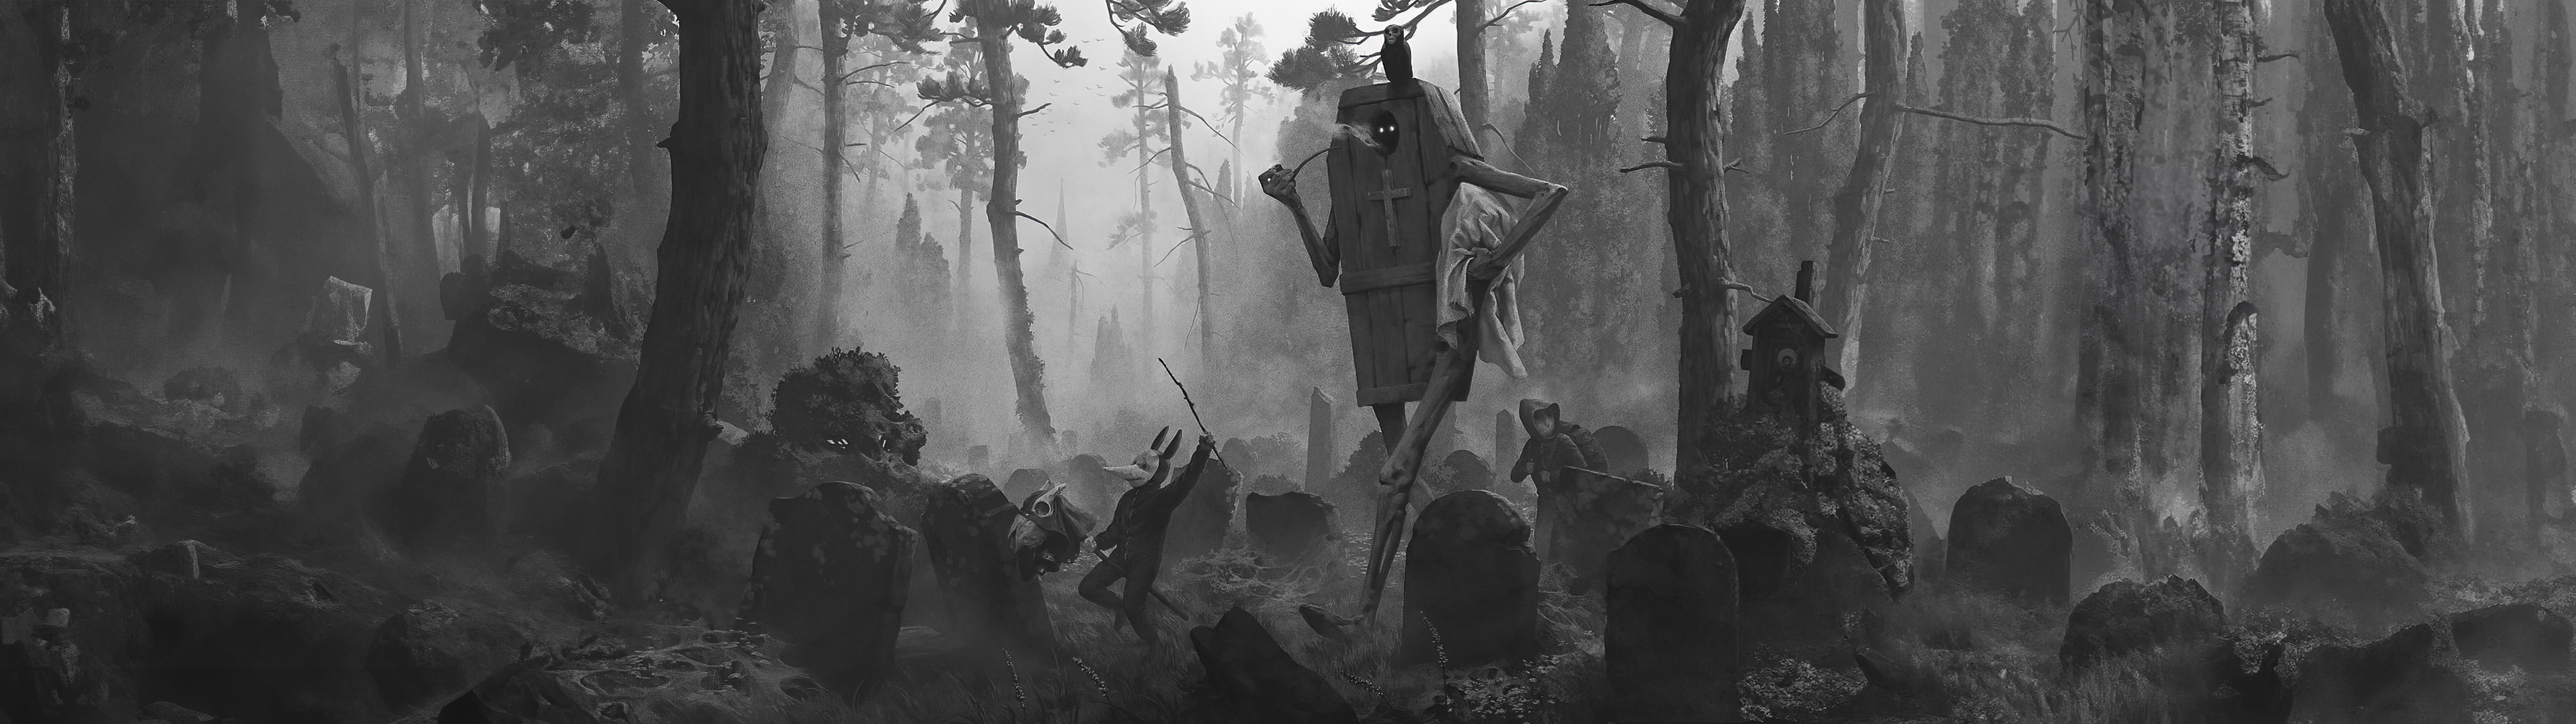 Konstantin Kostadinov Artwork Halloween Forest Trees Coffins Digital Art Ultrawide Monochrome 7113x2000